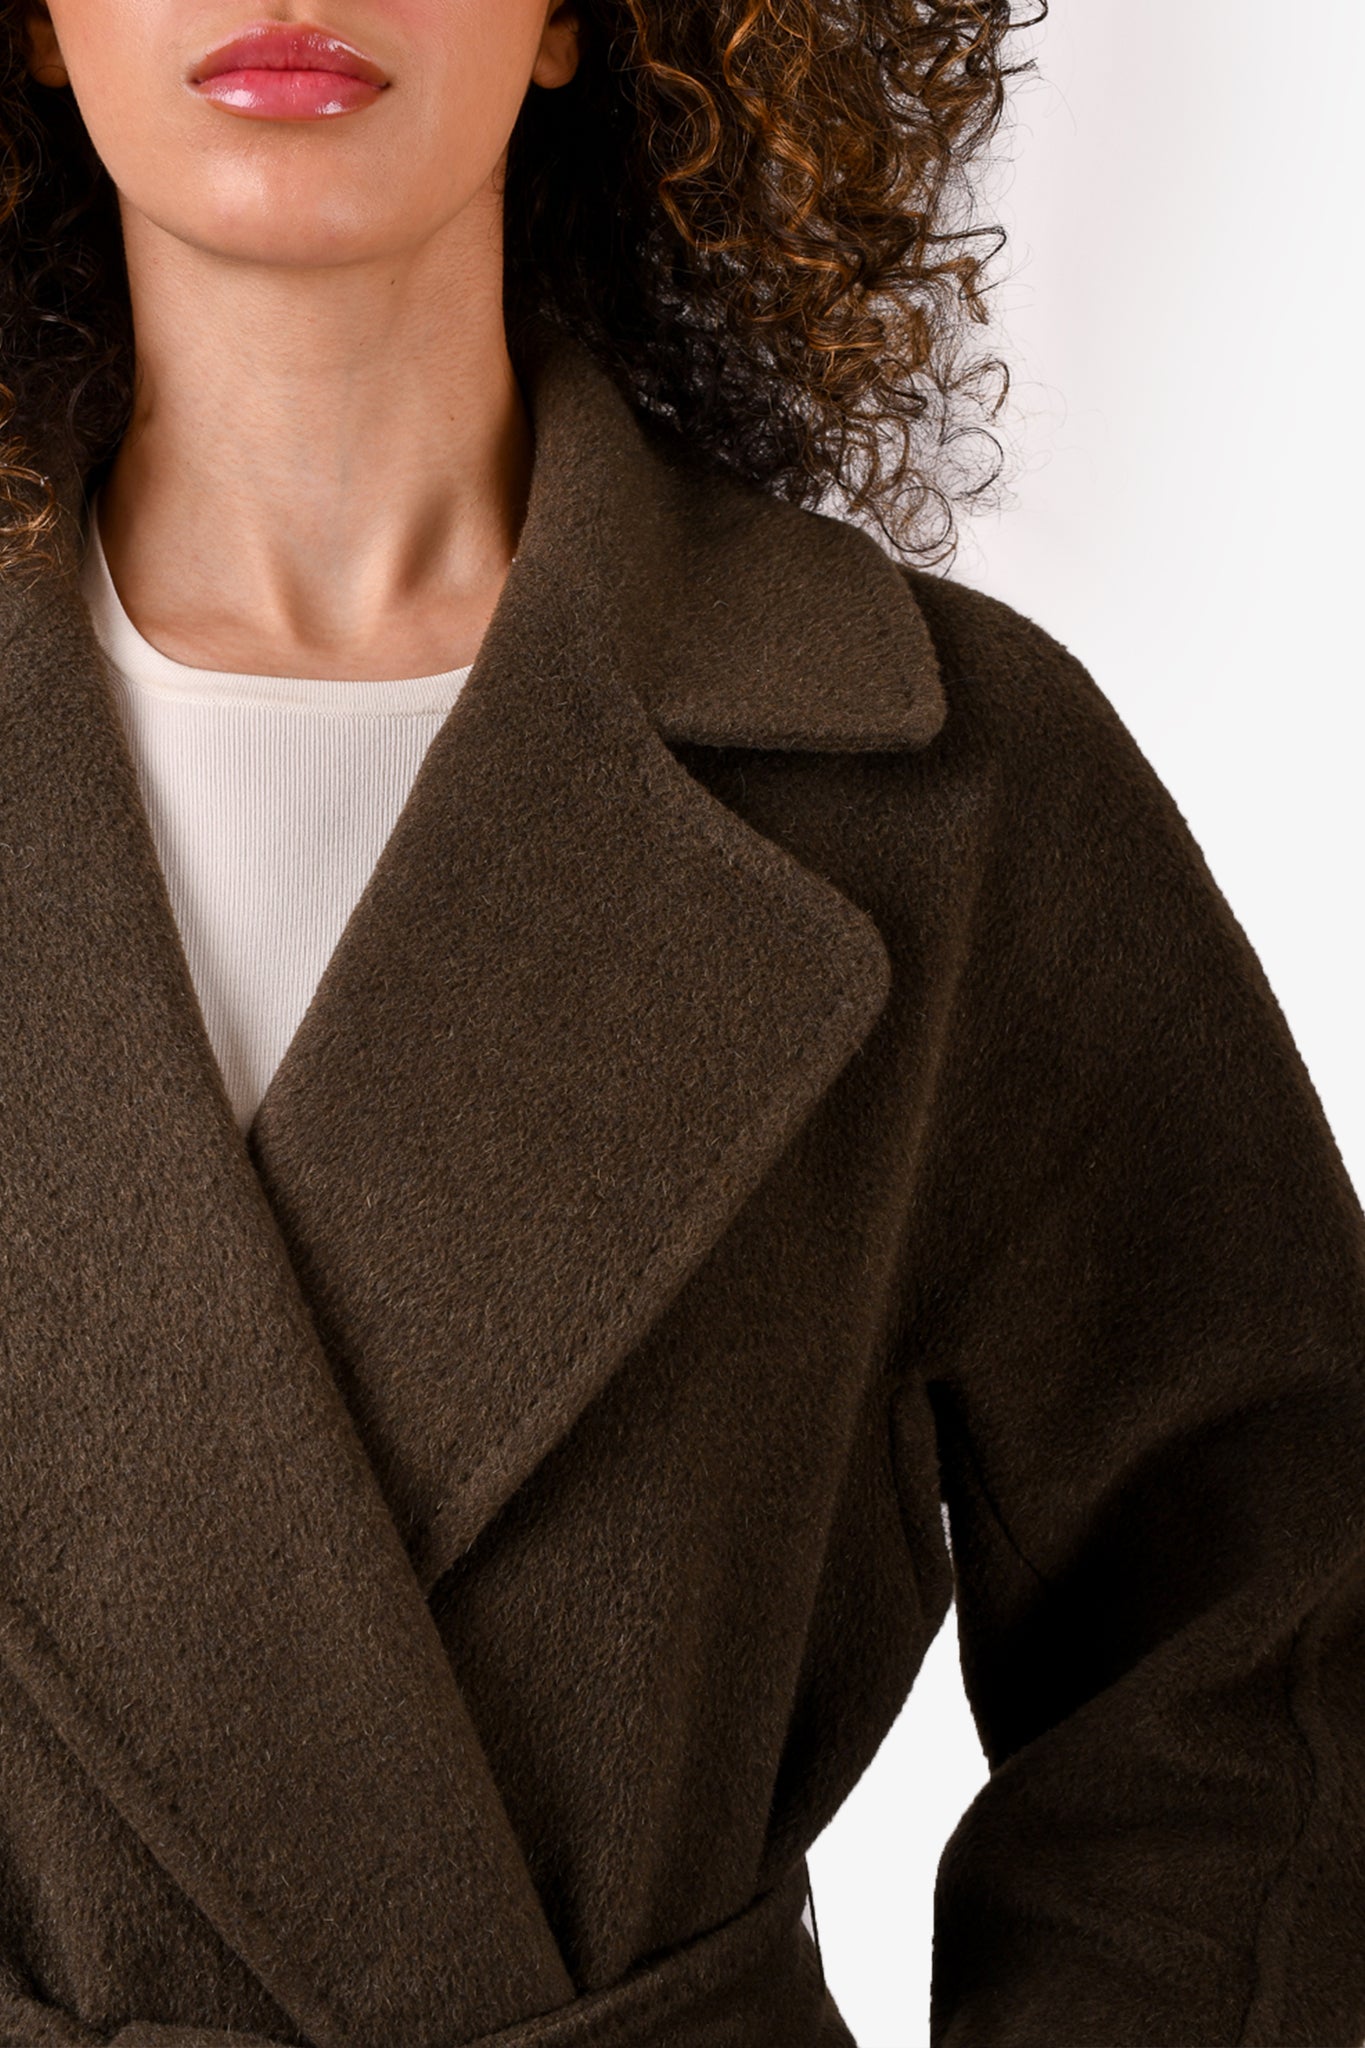 Weekend Max Mara Olive Green Wool/Alpaca/Mohair Wrap Coat with Belt Size 6 US